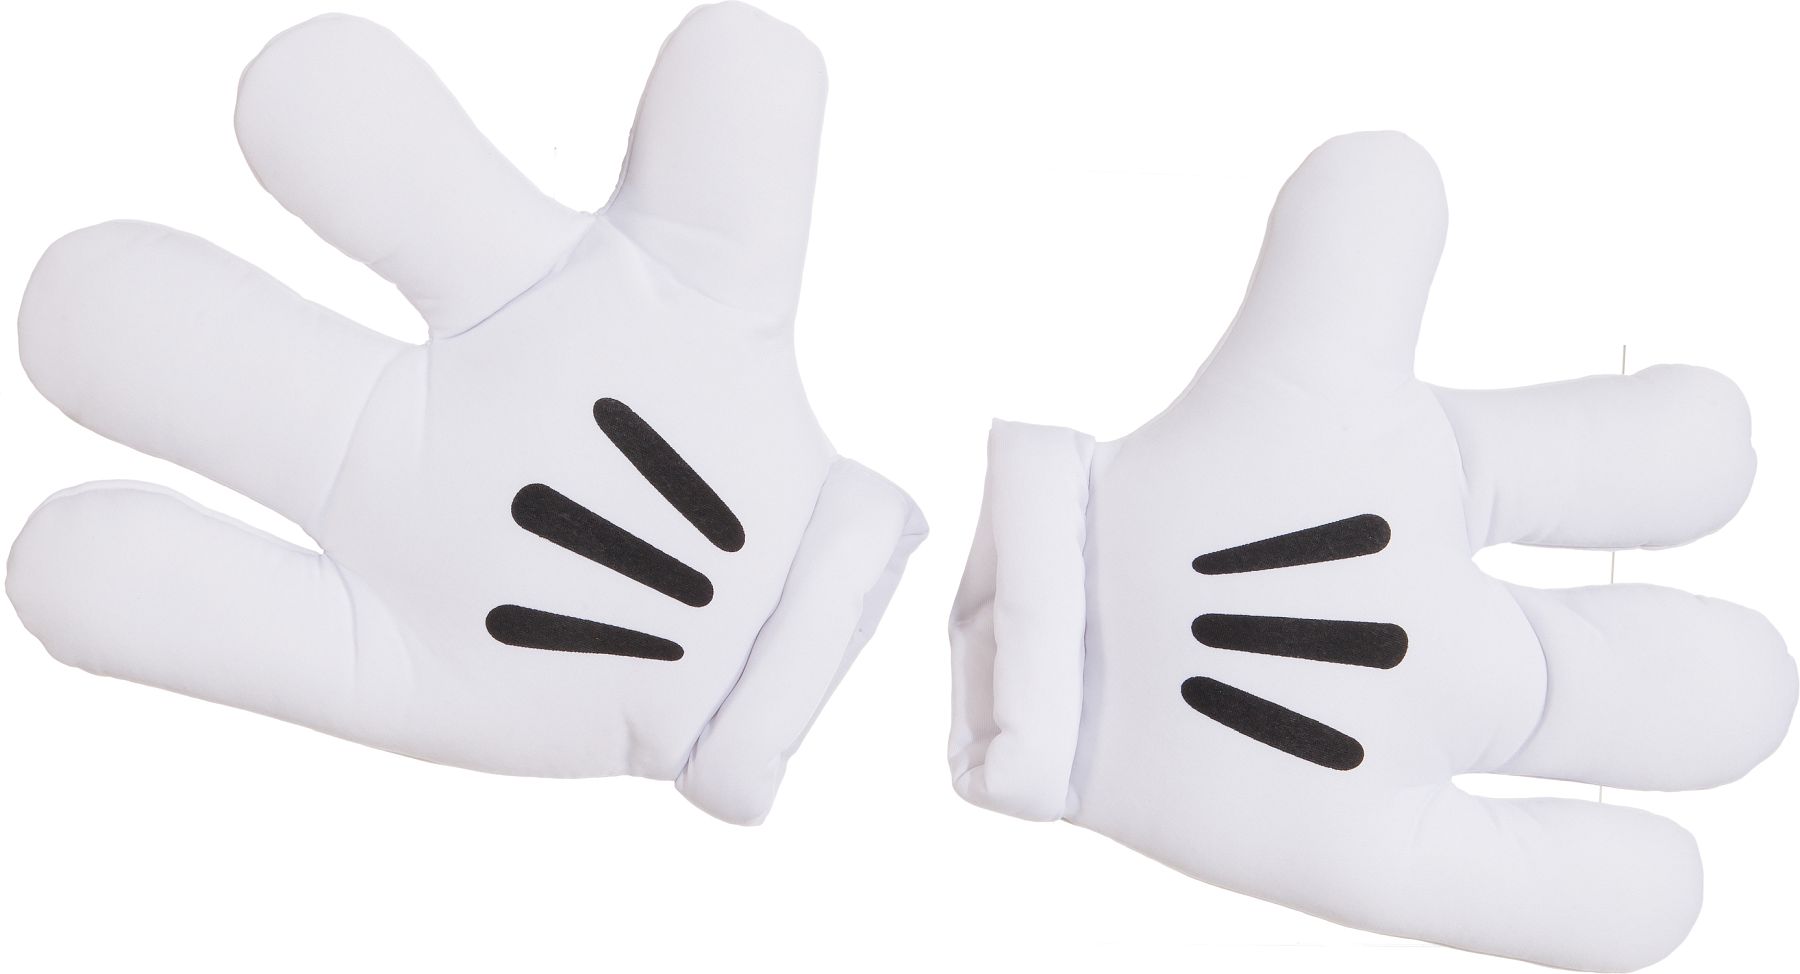 Jumbo mouse gloves